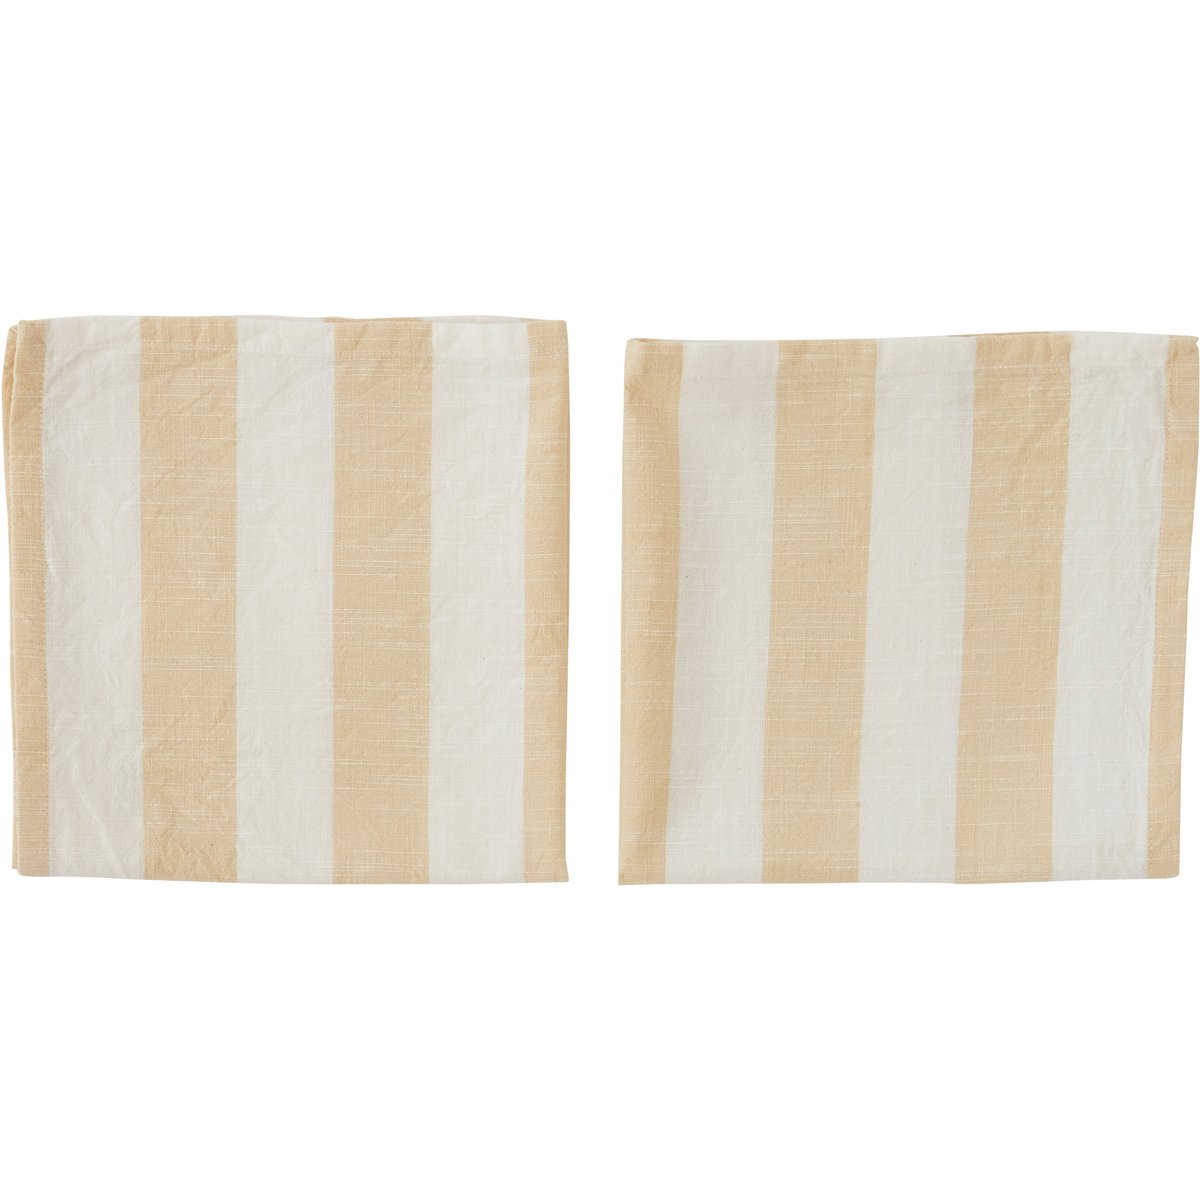 OYOY Striped servetti 45 x 45 cm 2-pakkaus Vanilla